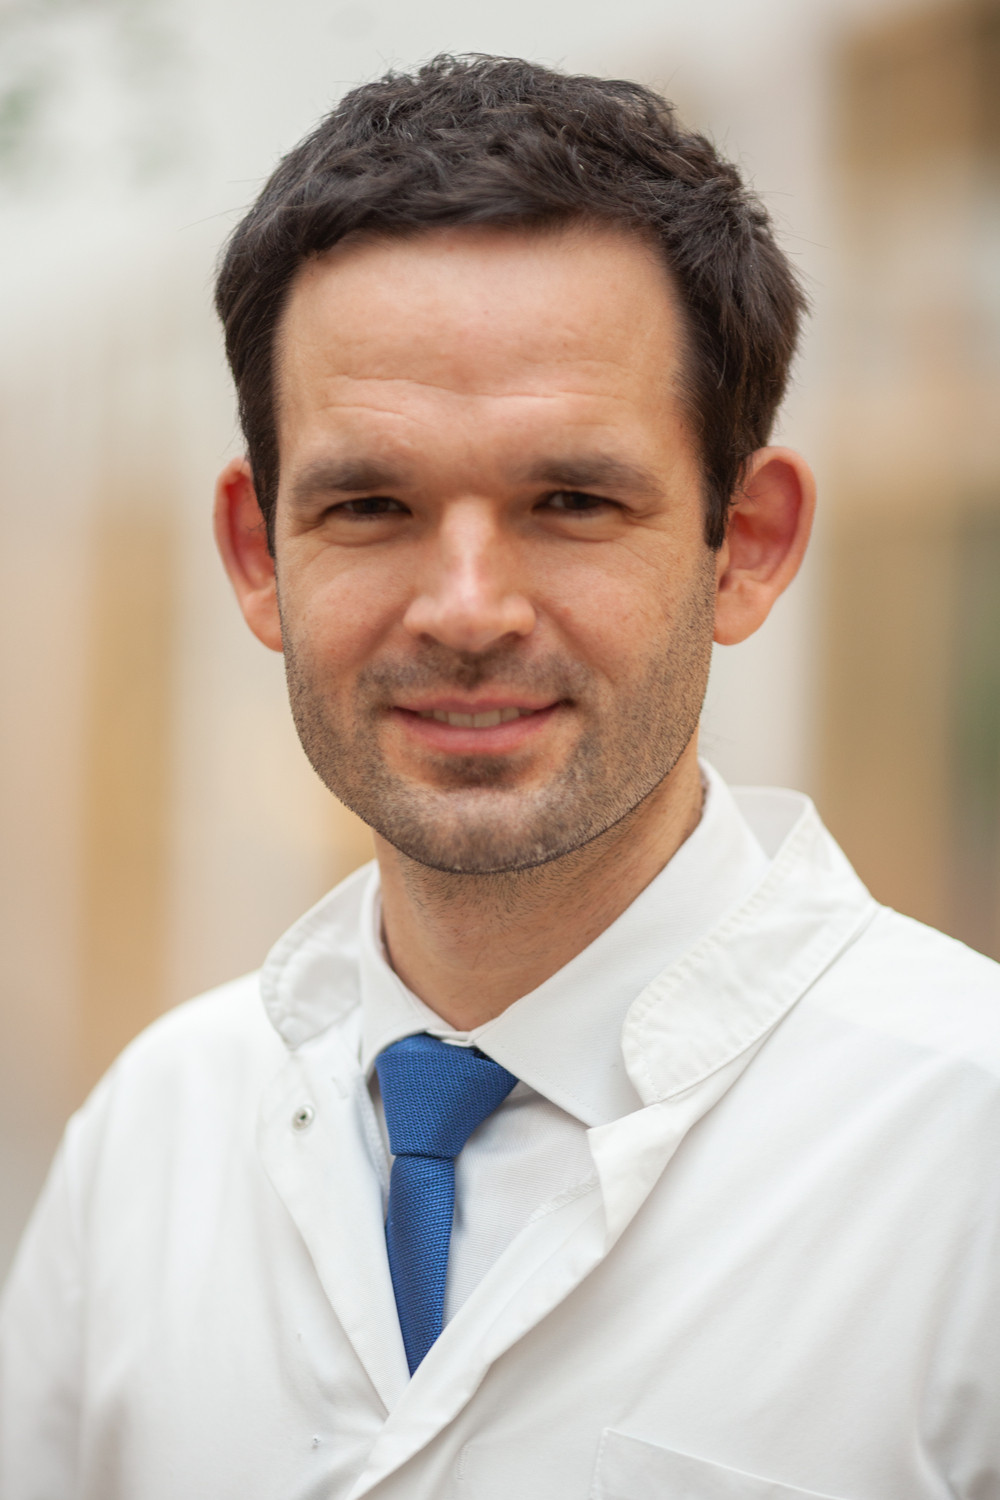 Prof. Till Köhne, Direktor der Poliklinik für Kieferorthopädie am Universitätsklinikum Leipzig